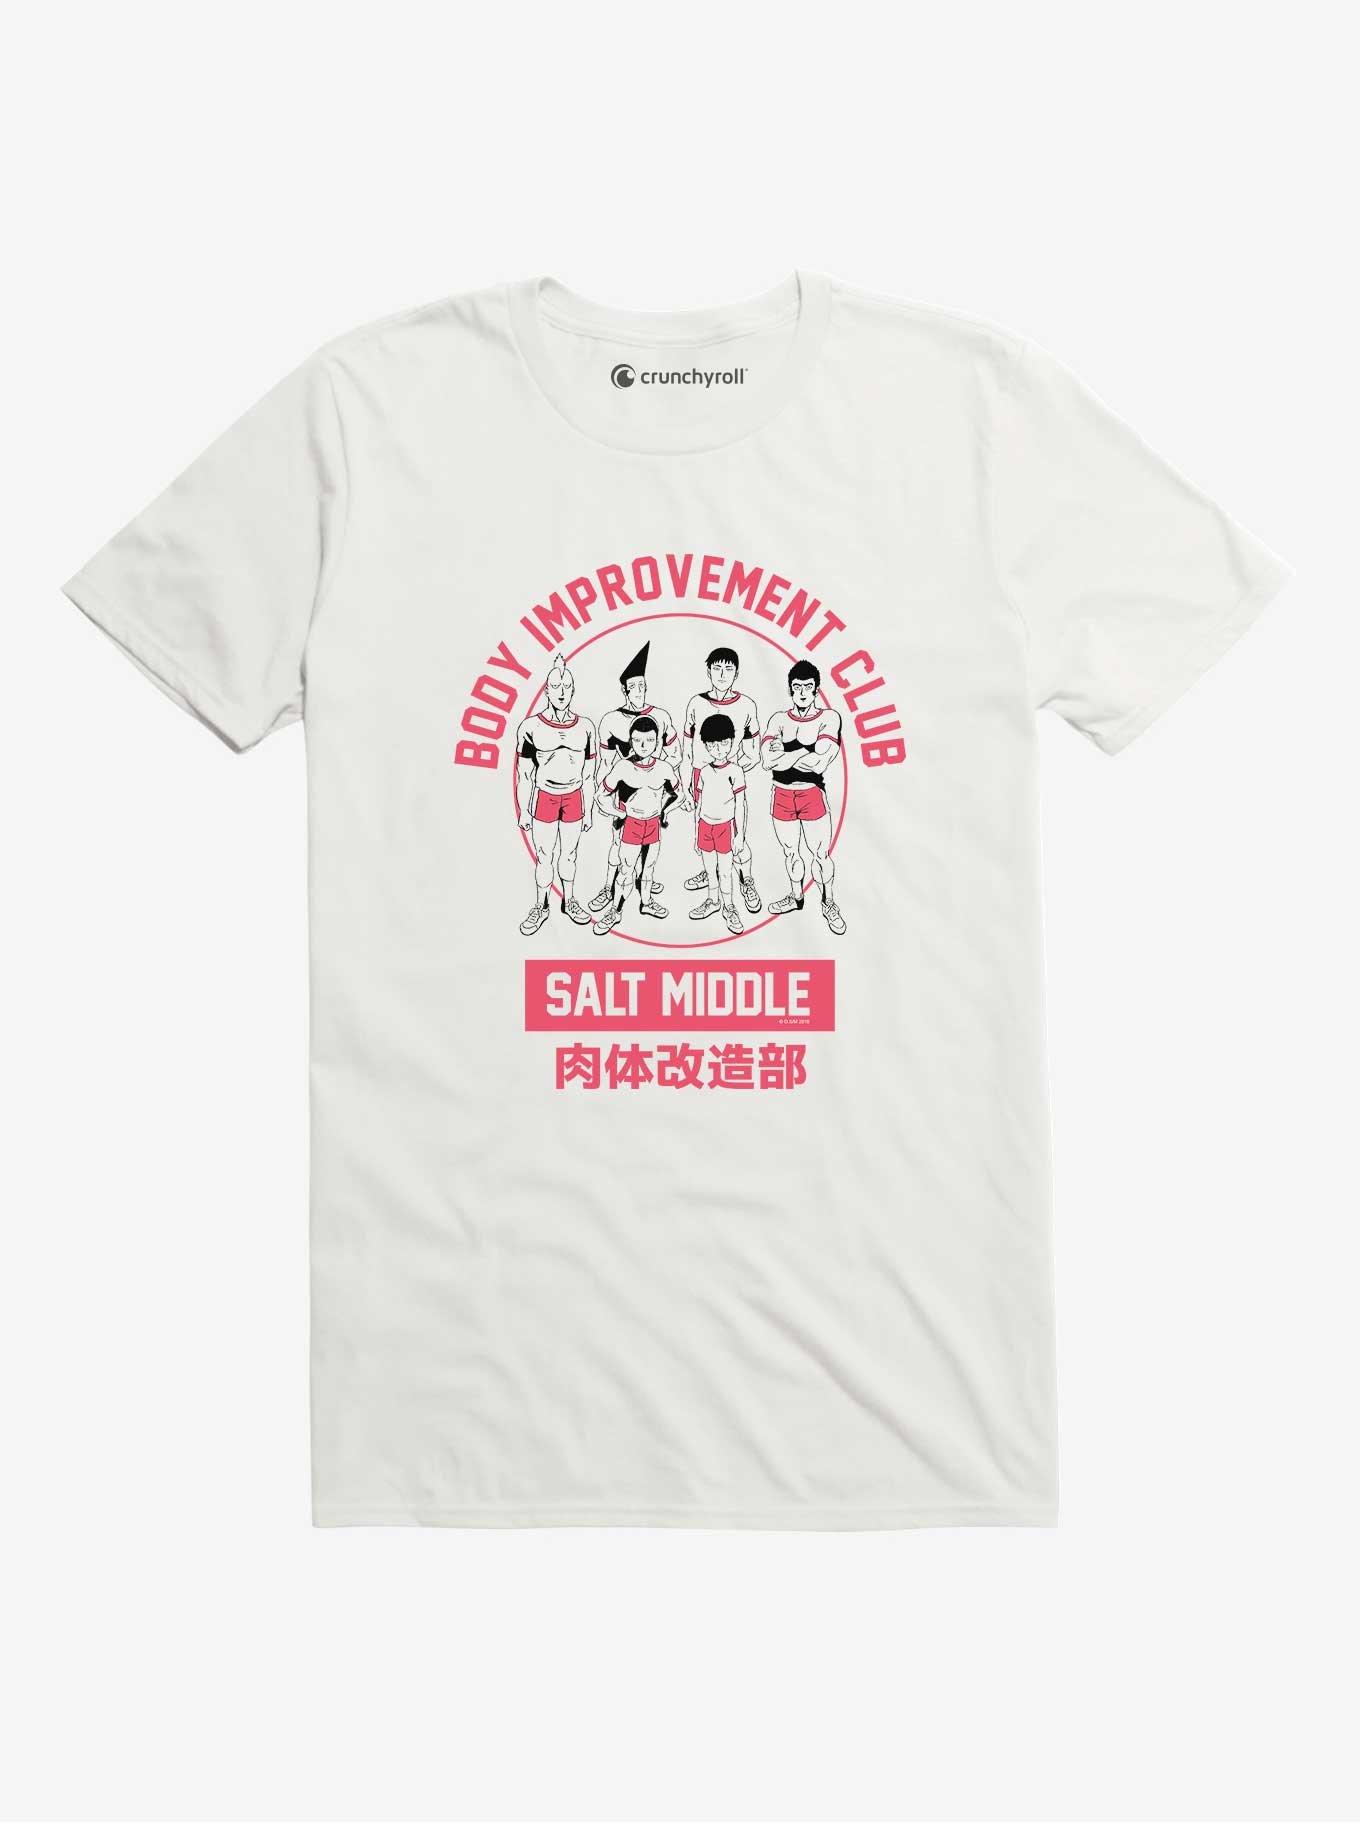 Bash Brothers Quack Quack Unisex Tee Shirt, Hoodie, Sweatshirt - The  Clothes You'll Ever Need